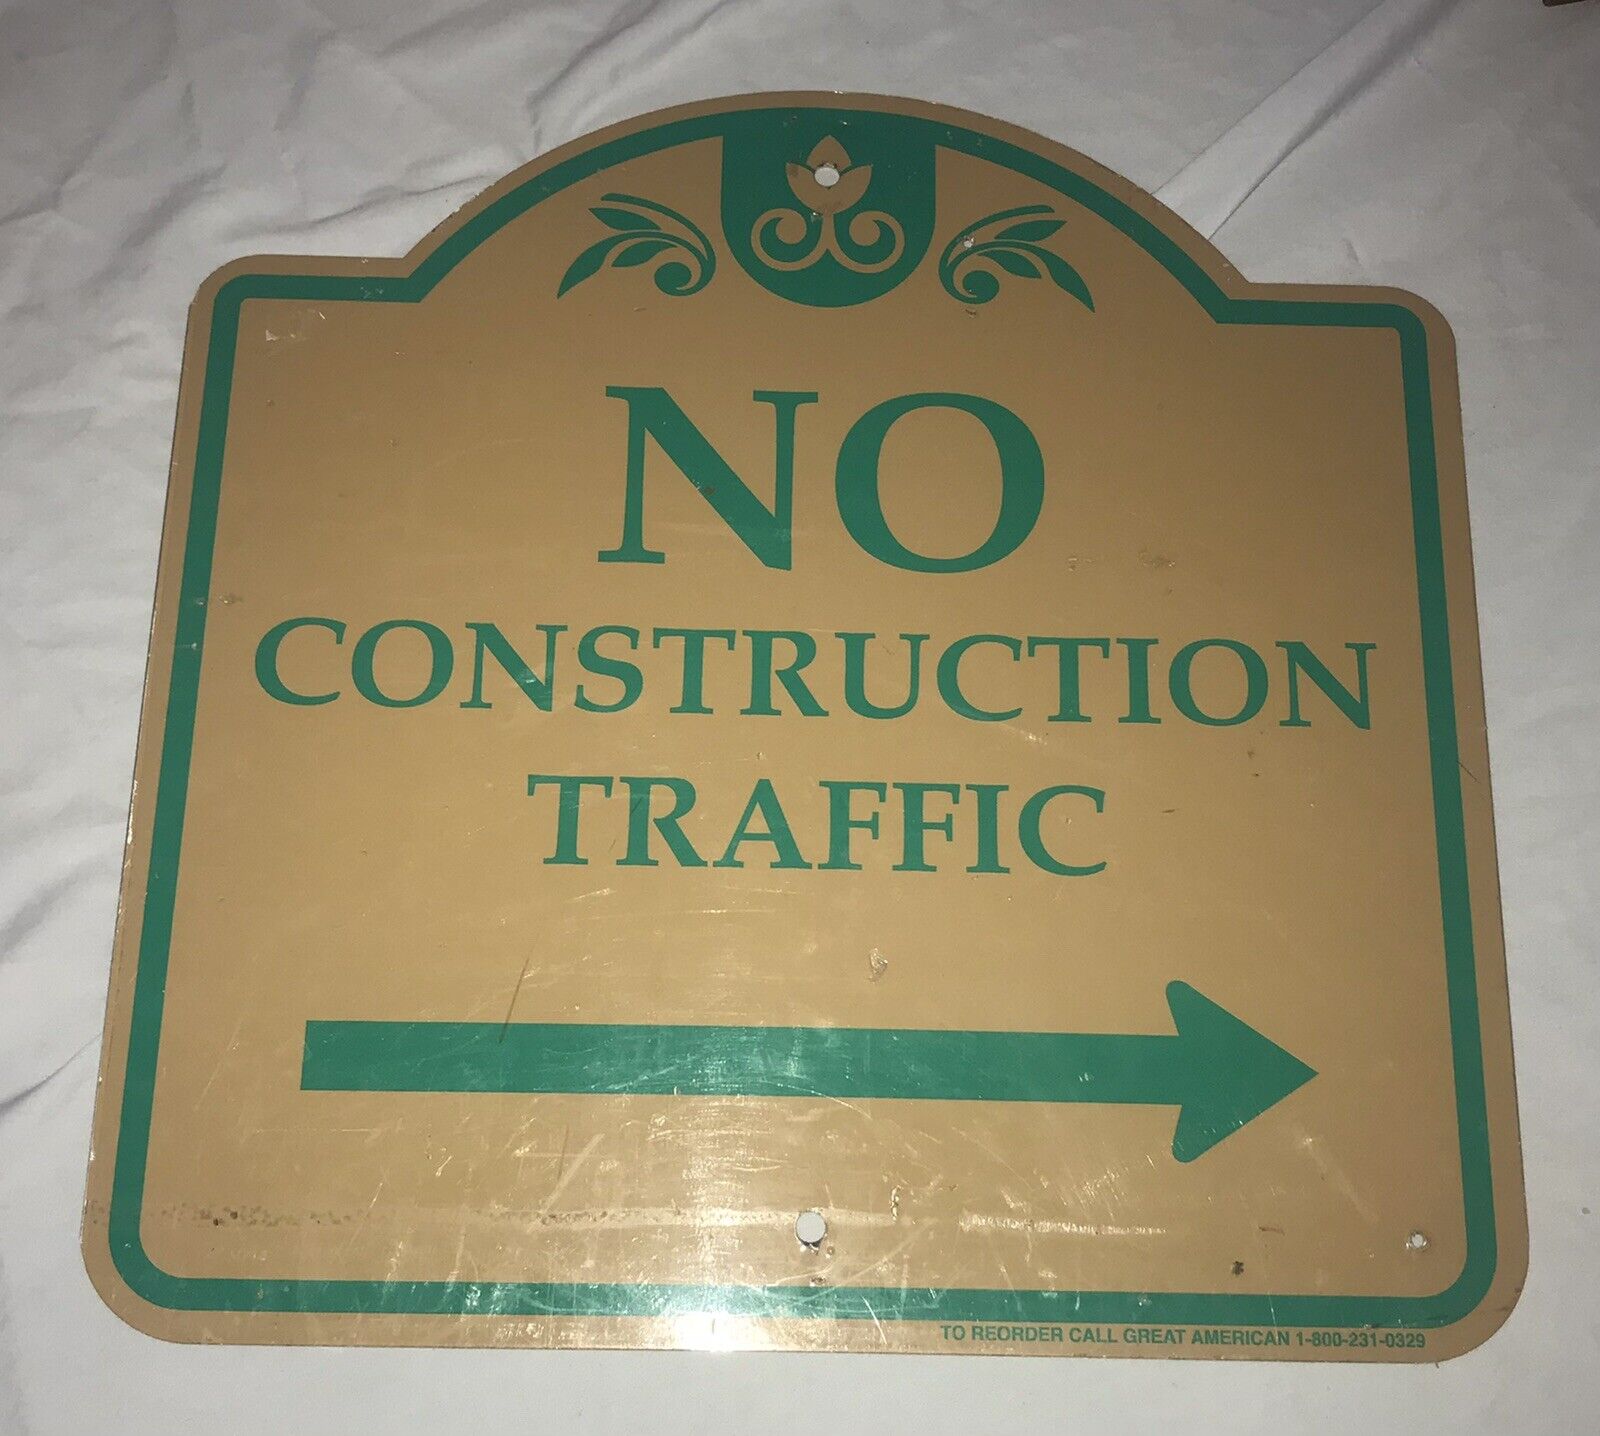 FANCY METAL STREET SIGN 18 X 18” “No Construction Traffic” Aluminum Brown Green